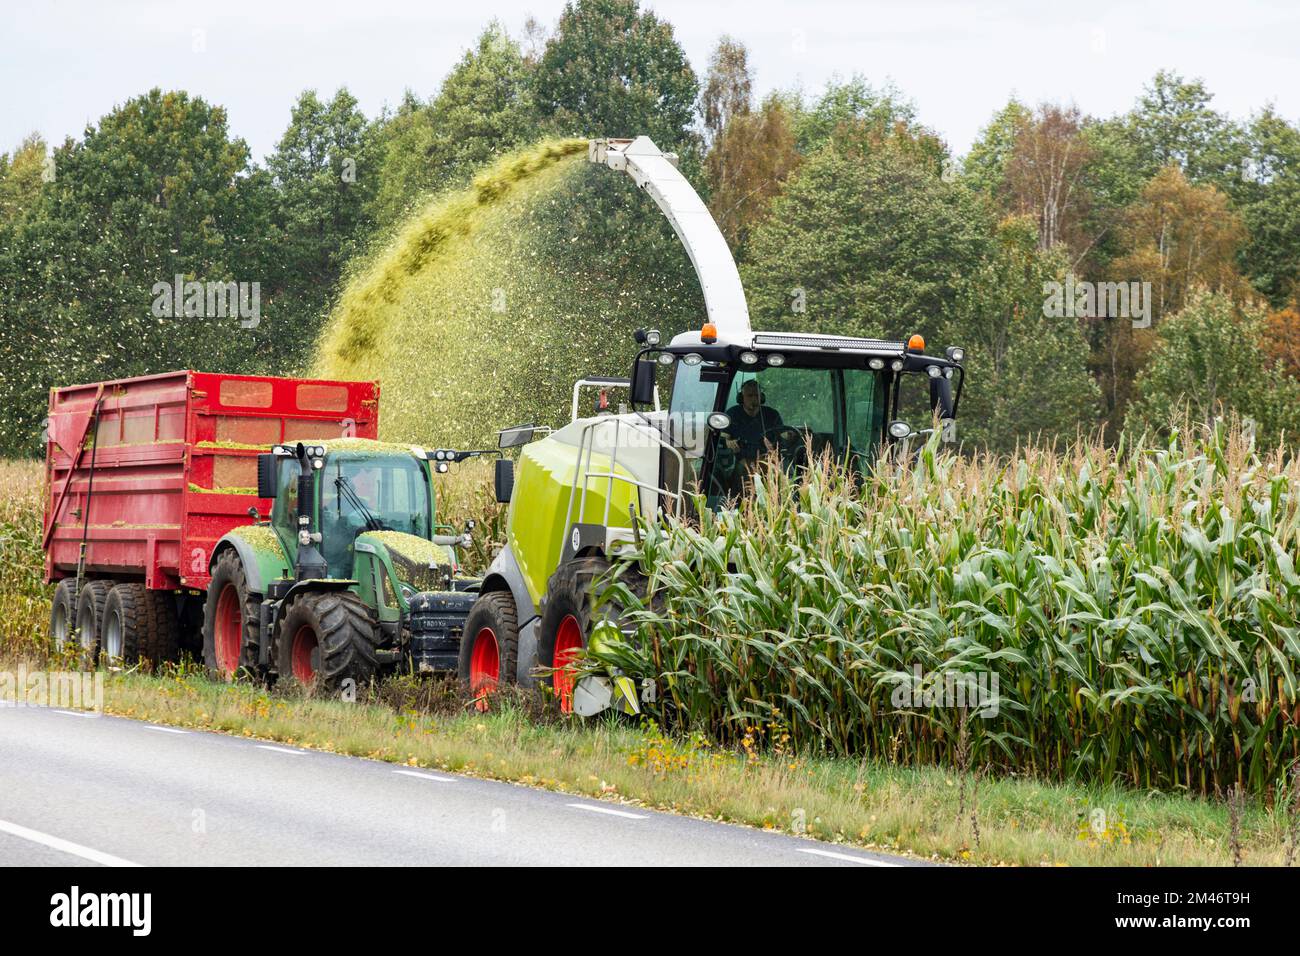 Tractor and combine harvesting corn Stock Photo